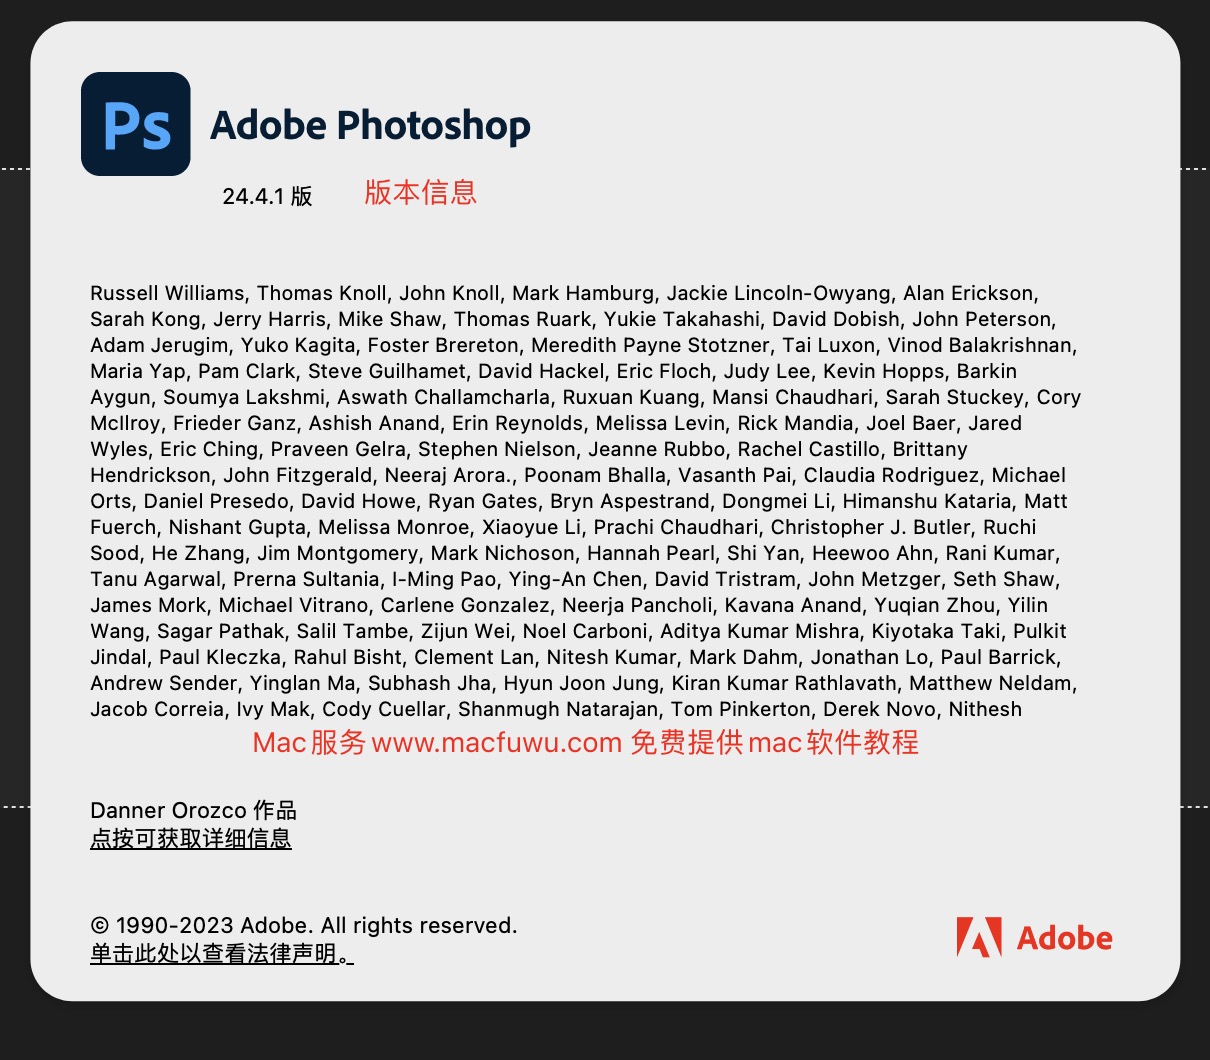 Adobe Photoshop 2023 for Mac